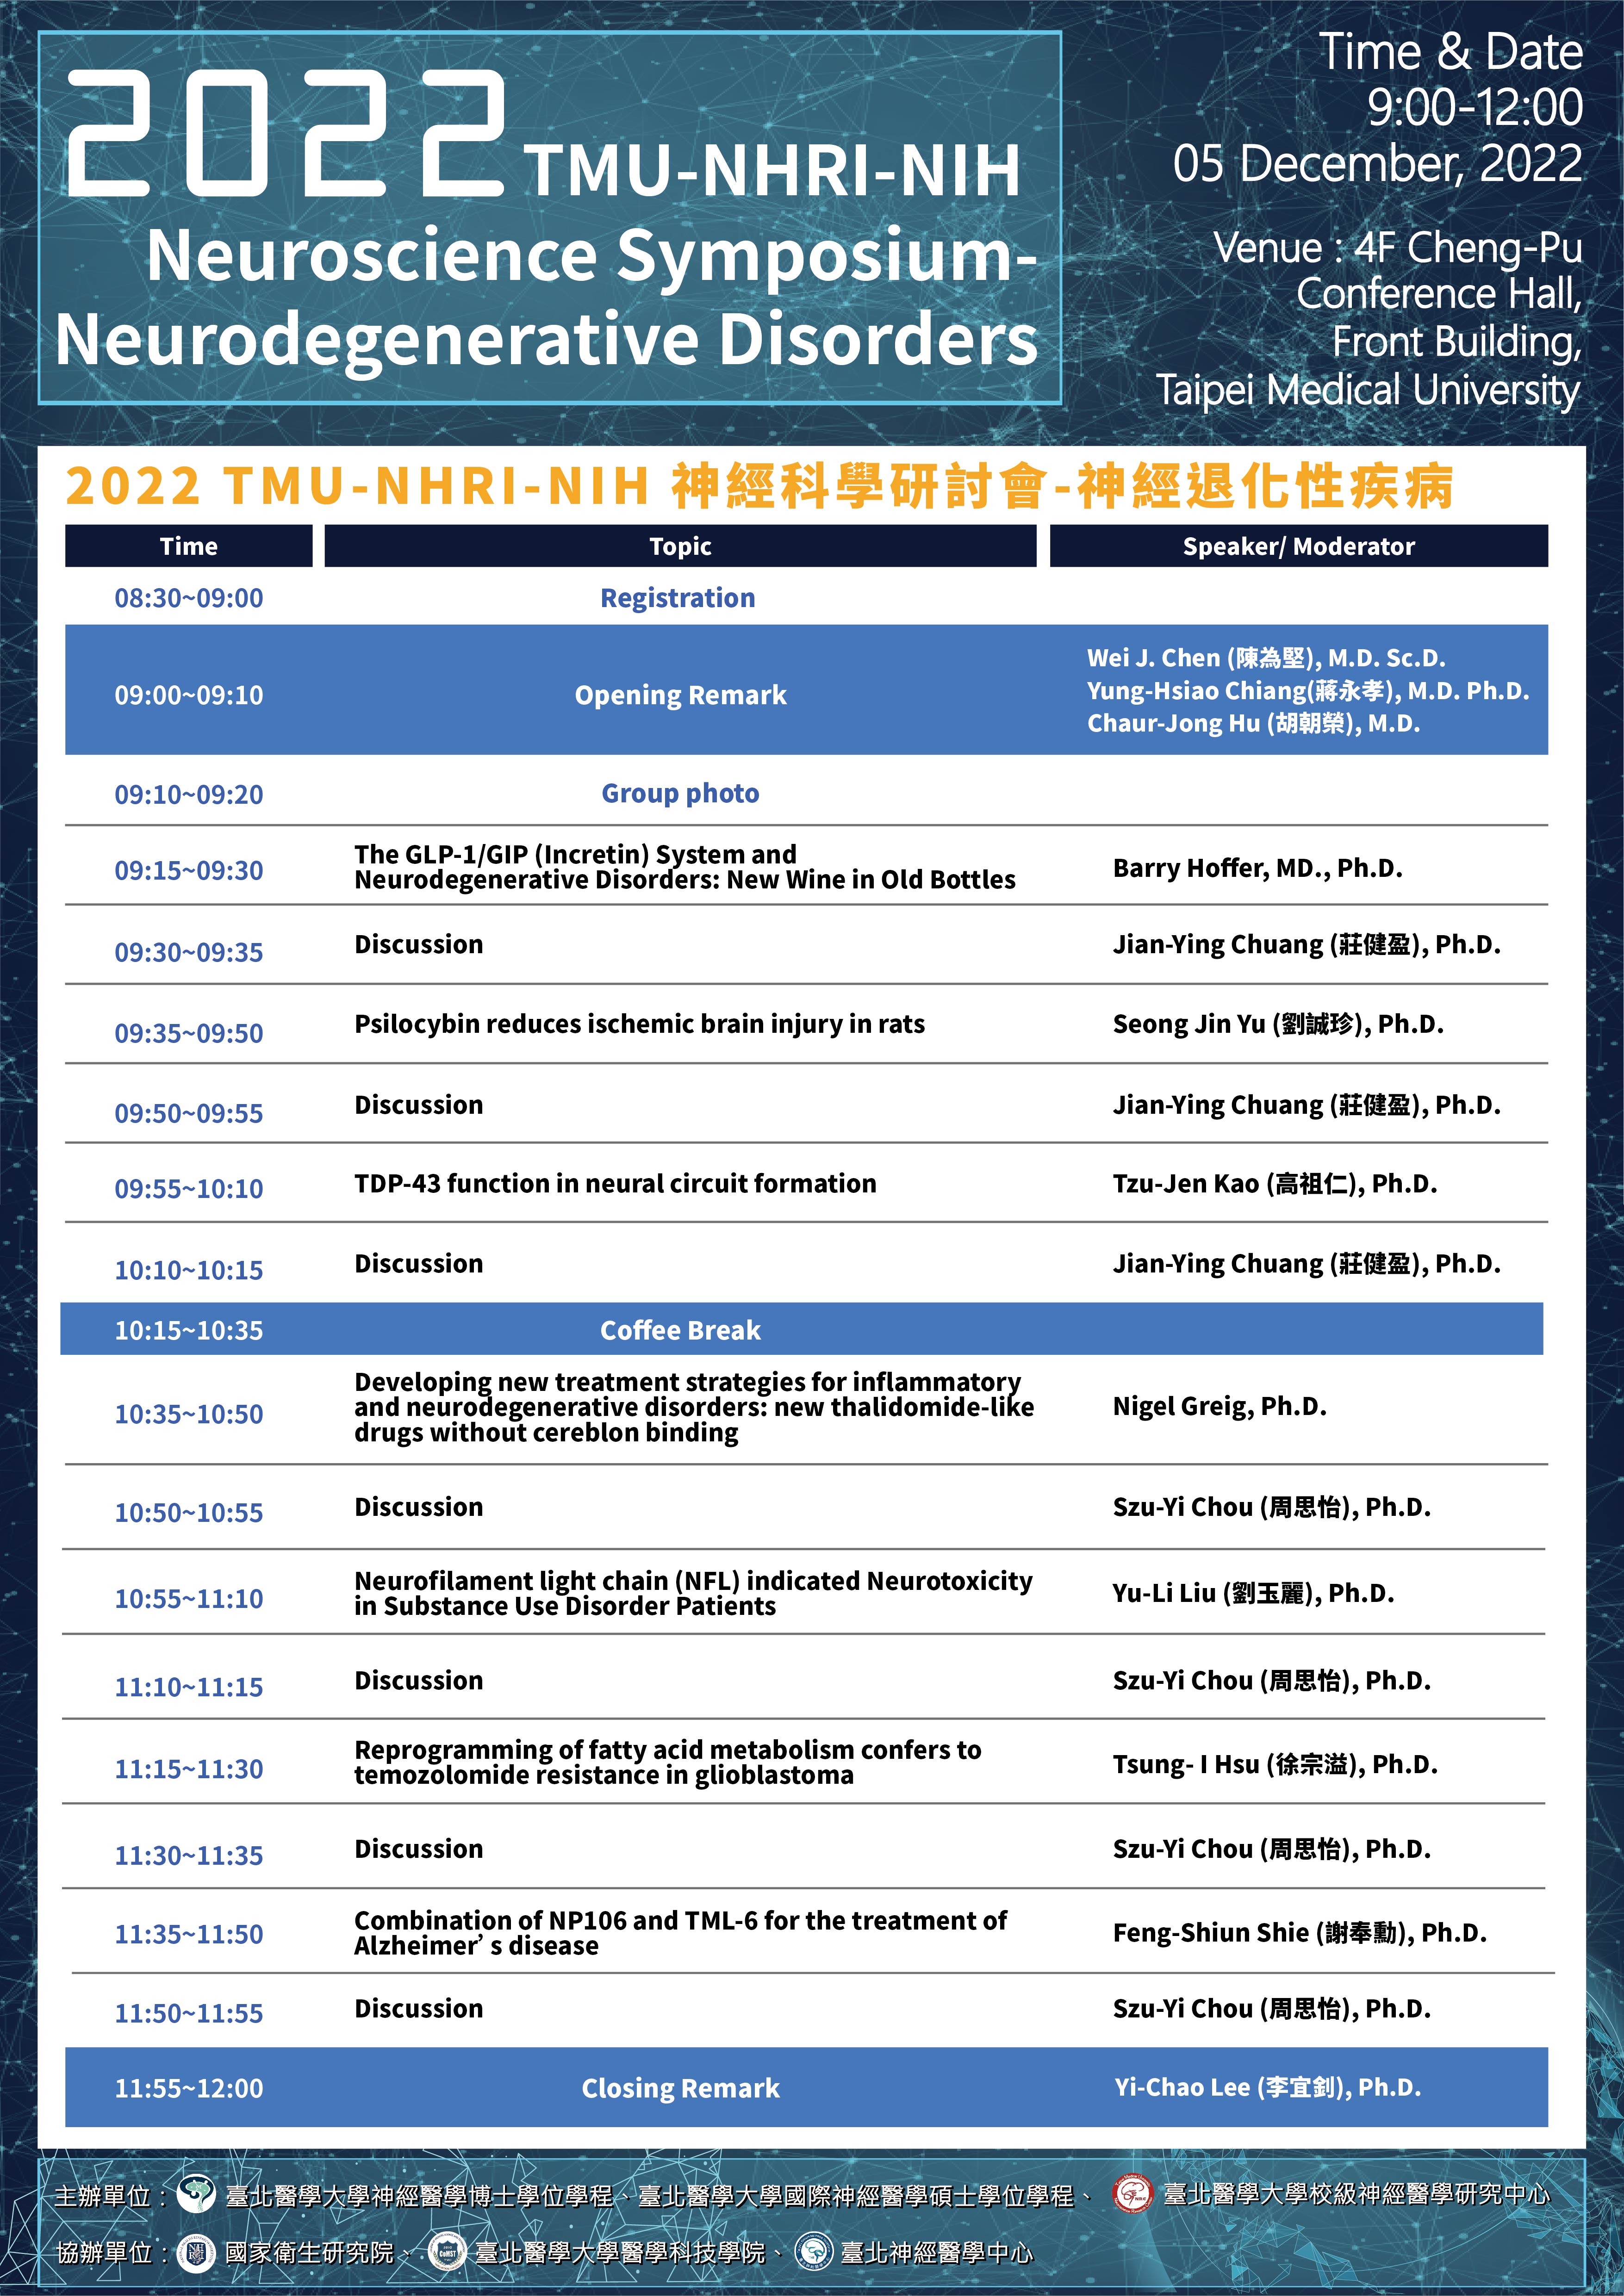 2022 Neuroscience Symposium-Neurodegenerative Disorders